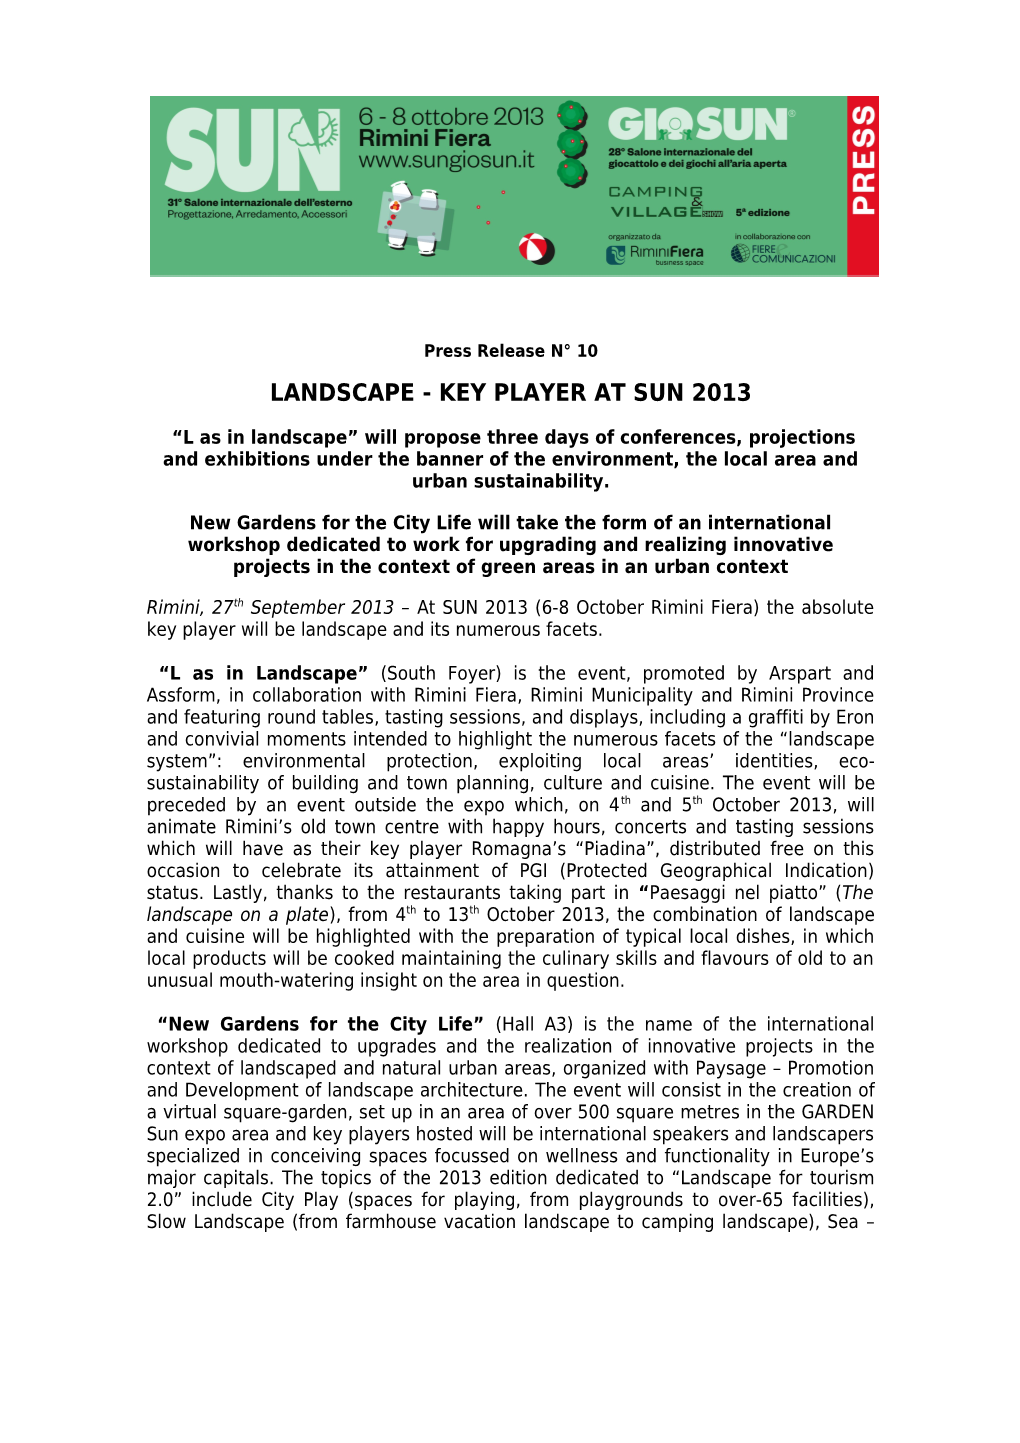 Landscape - Key Player at Sun 2013